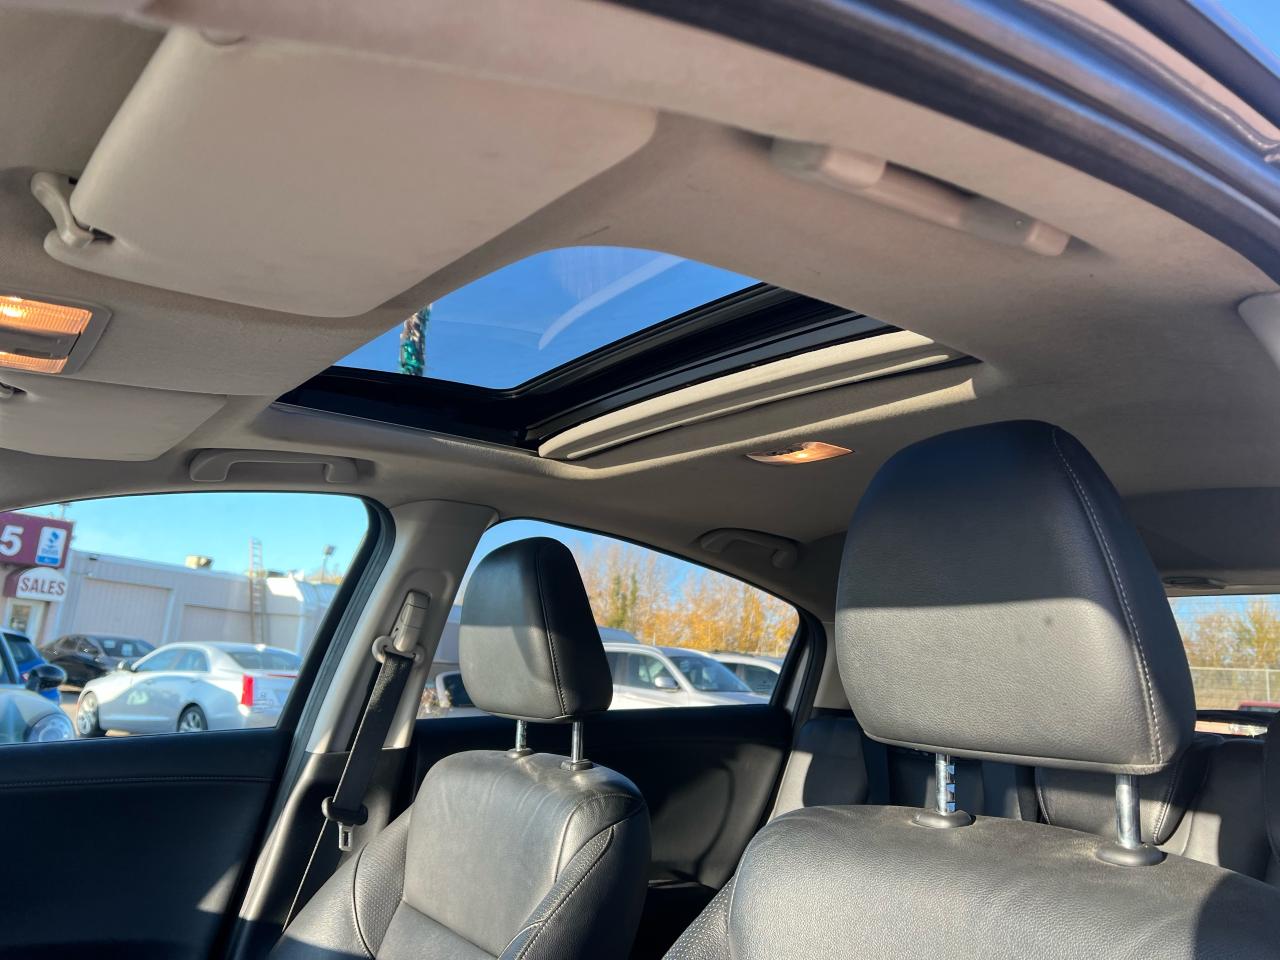 2018 Honda HR-V EX-L Navi AWD, Leather, Sun Roof, Lane Assist + - Photo #17